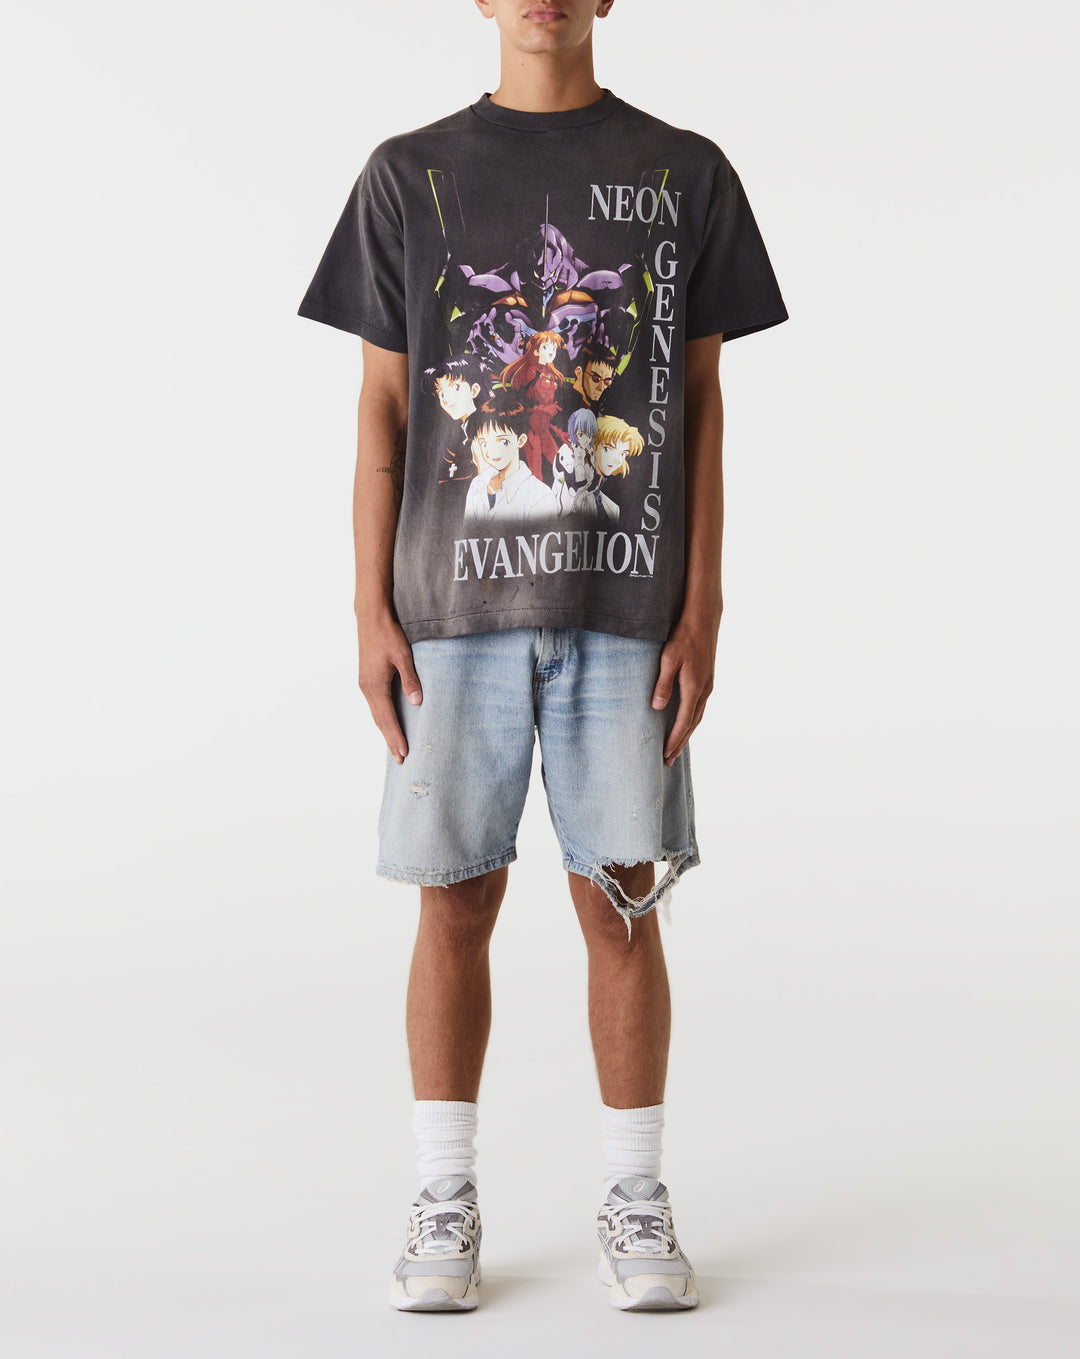 Saint Michael Neon Genesis T-Shirt  - XHIBITION